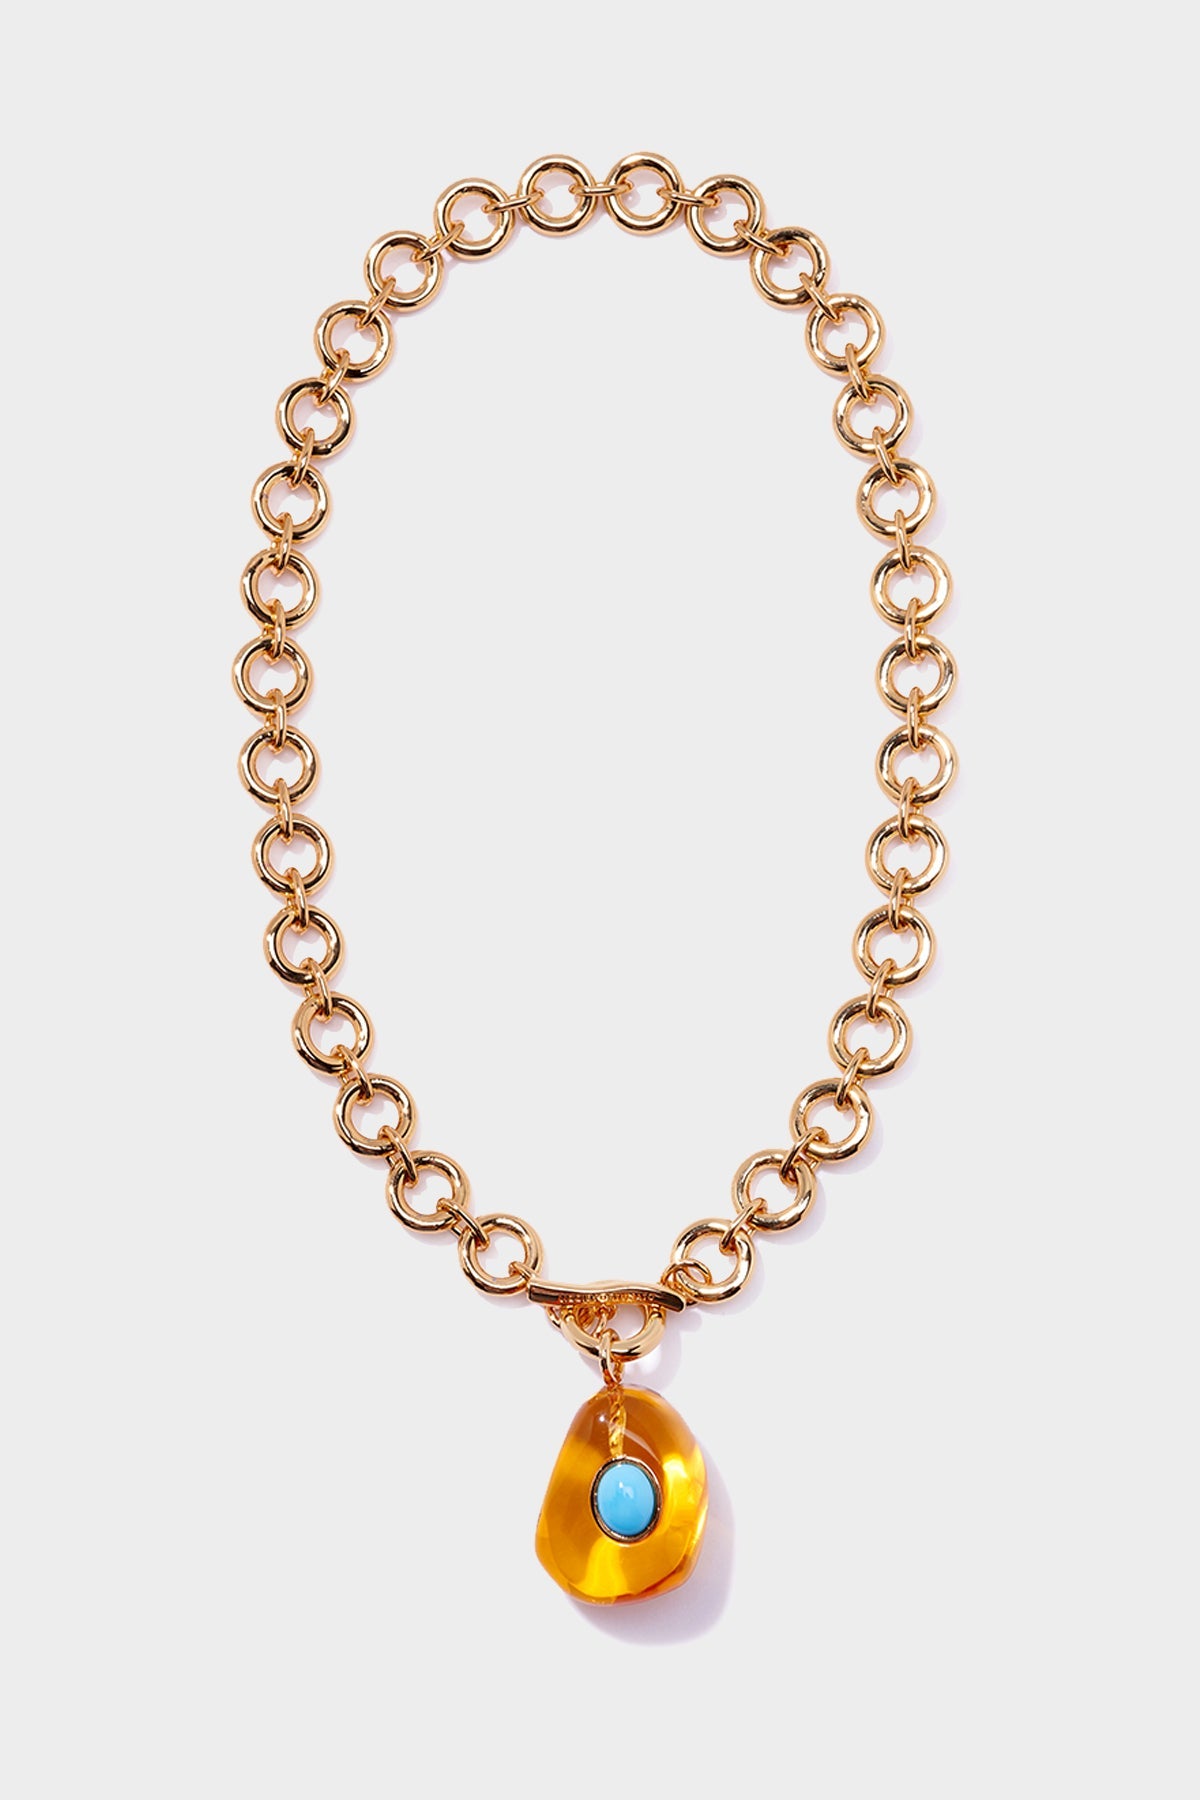 Meteor Necklace in Gold - shop-olivia.com